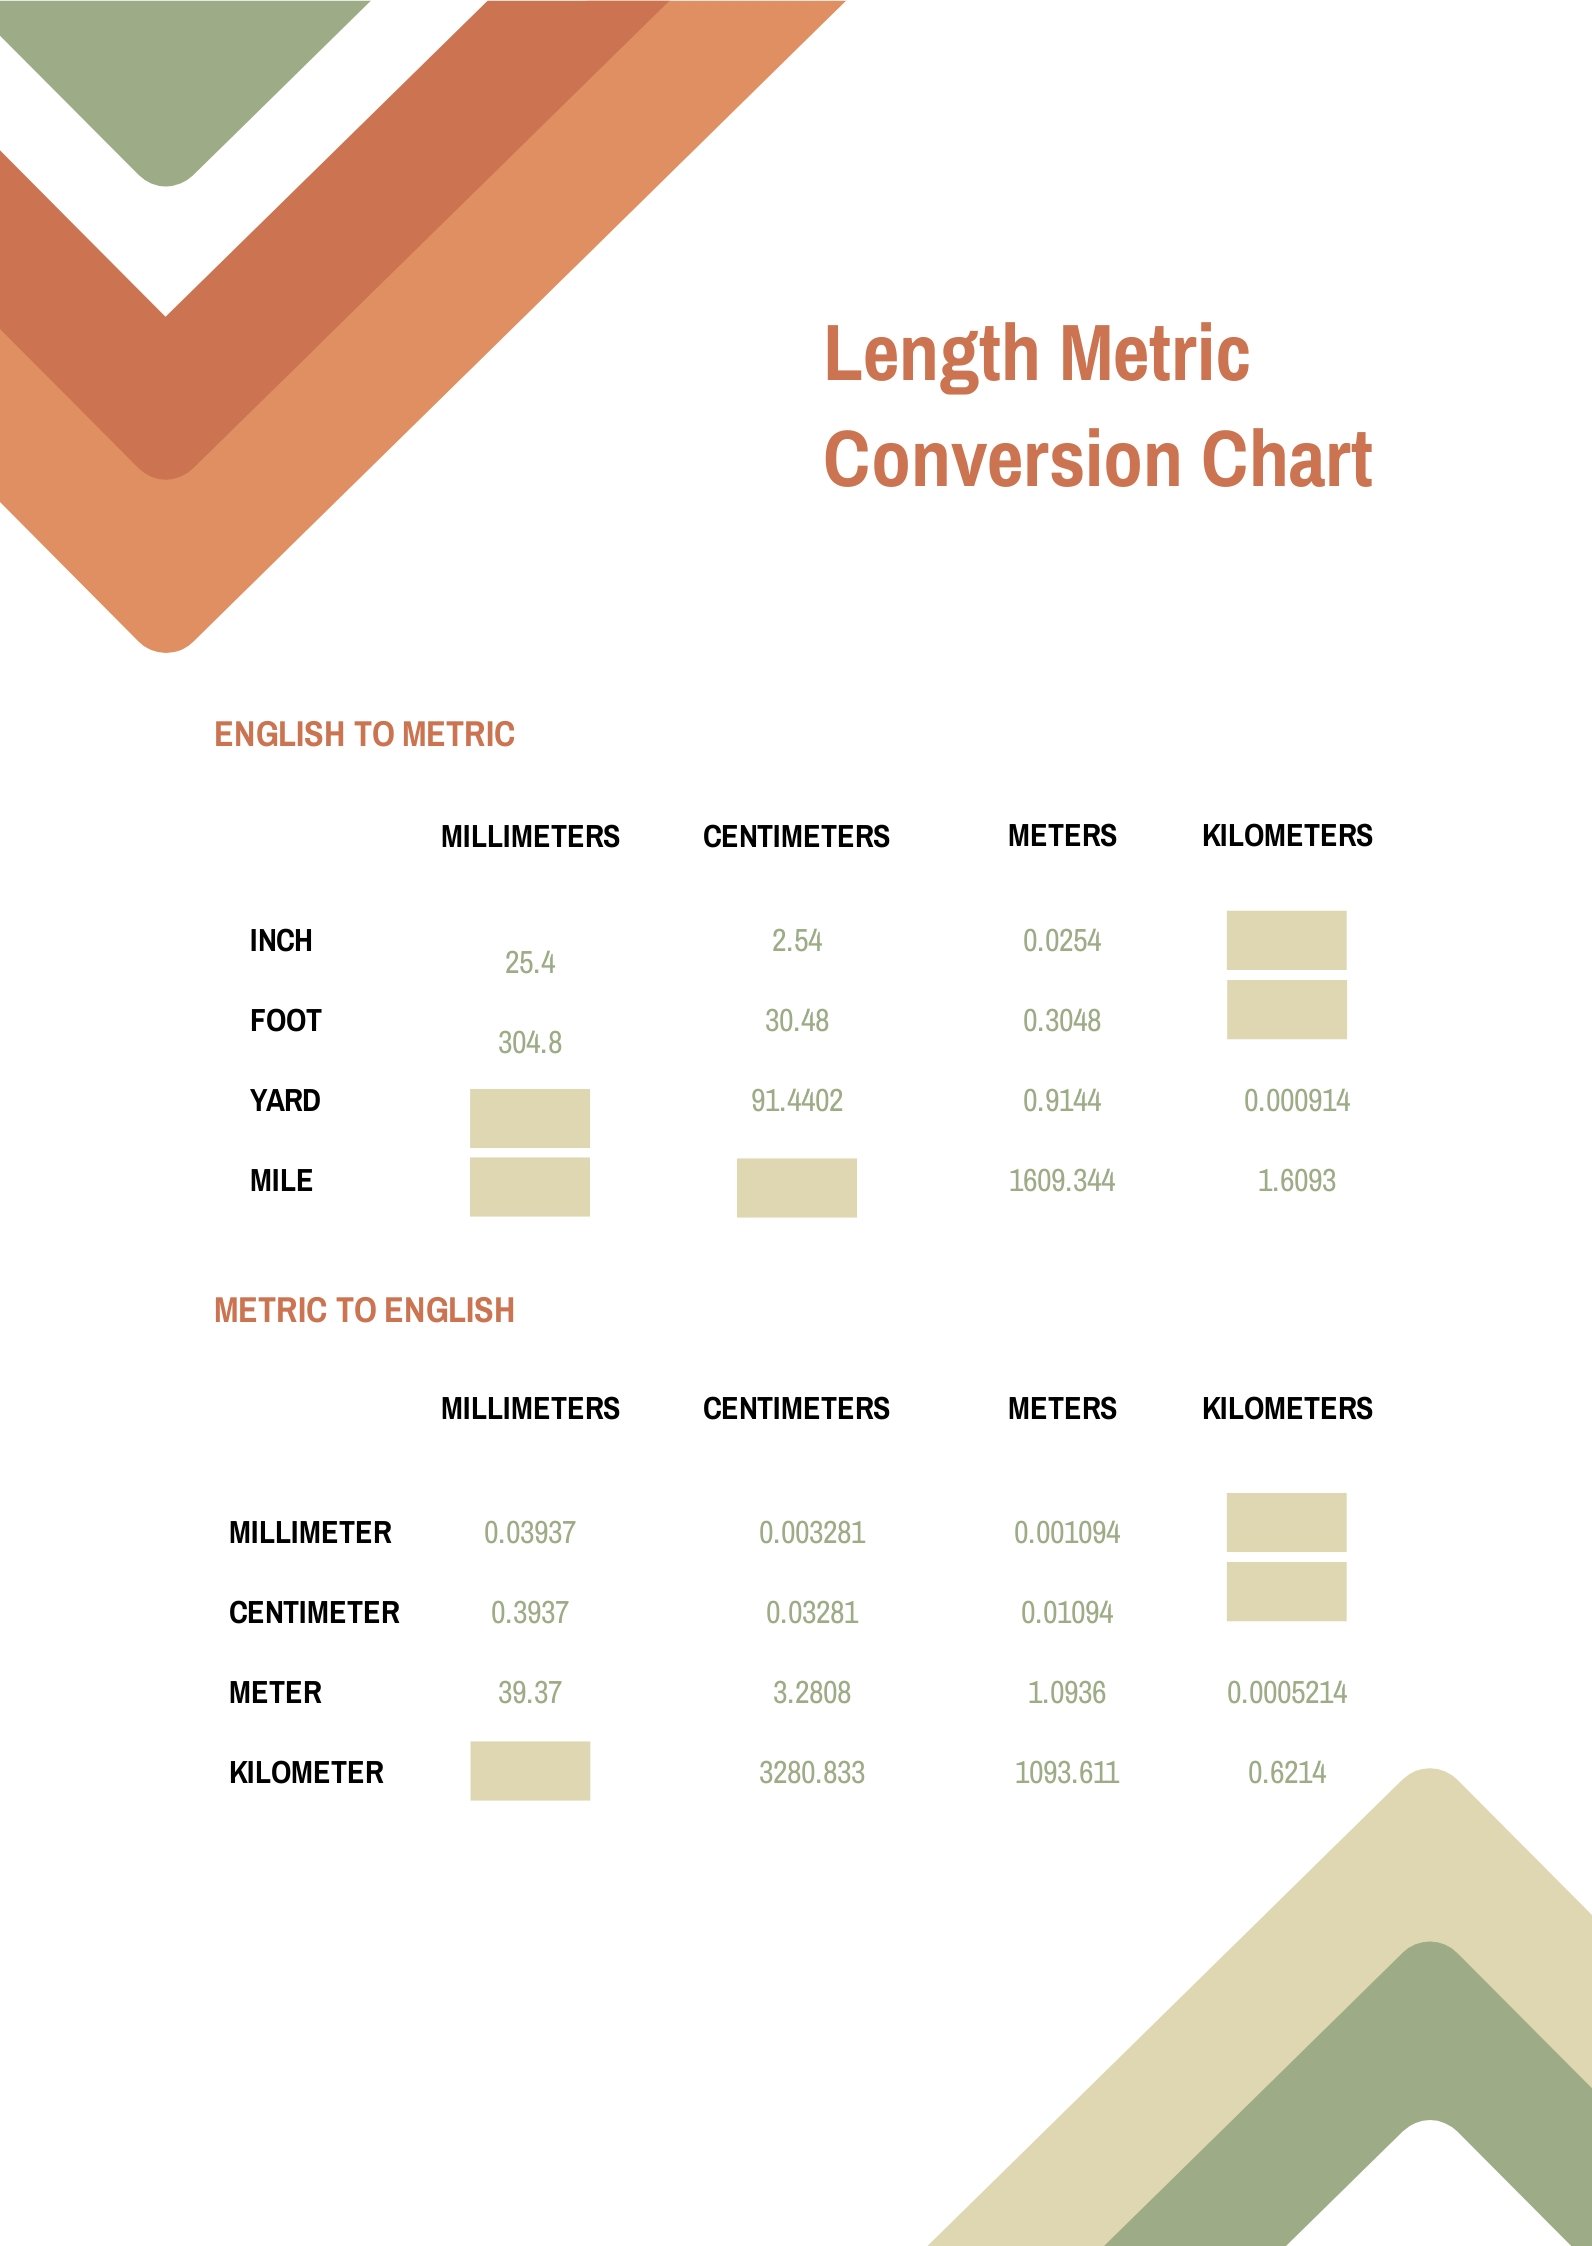 Length Metric Conversion Chart in PDF